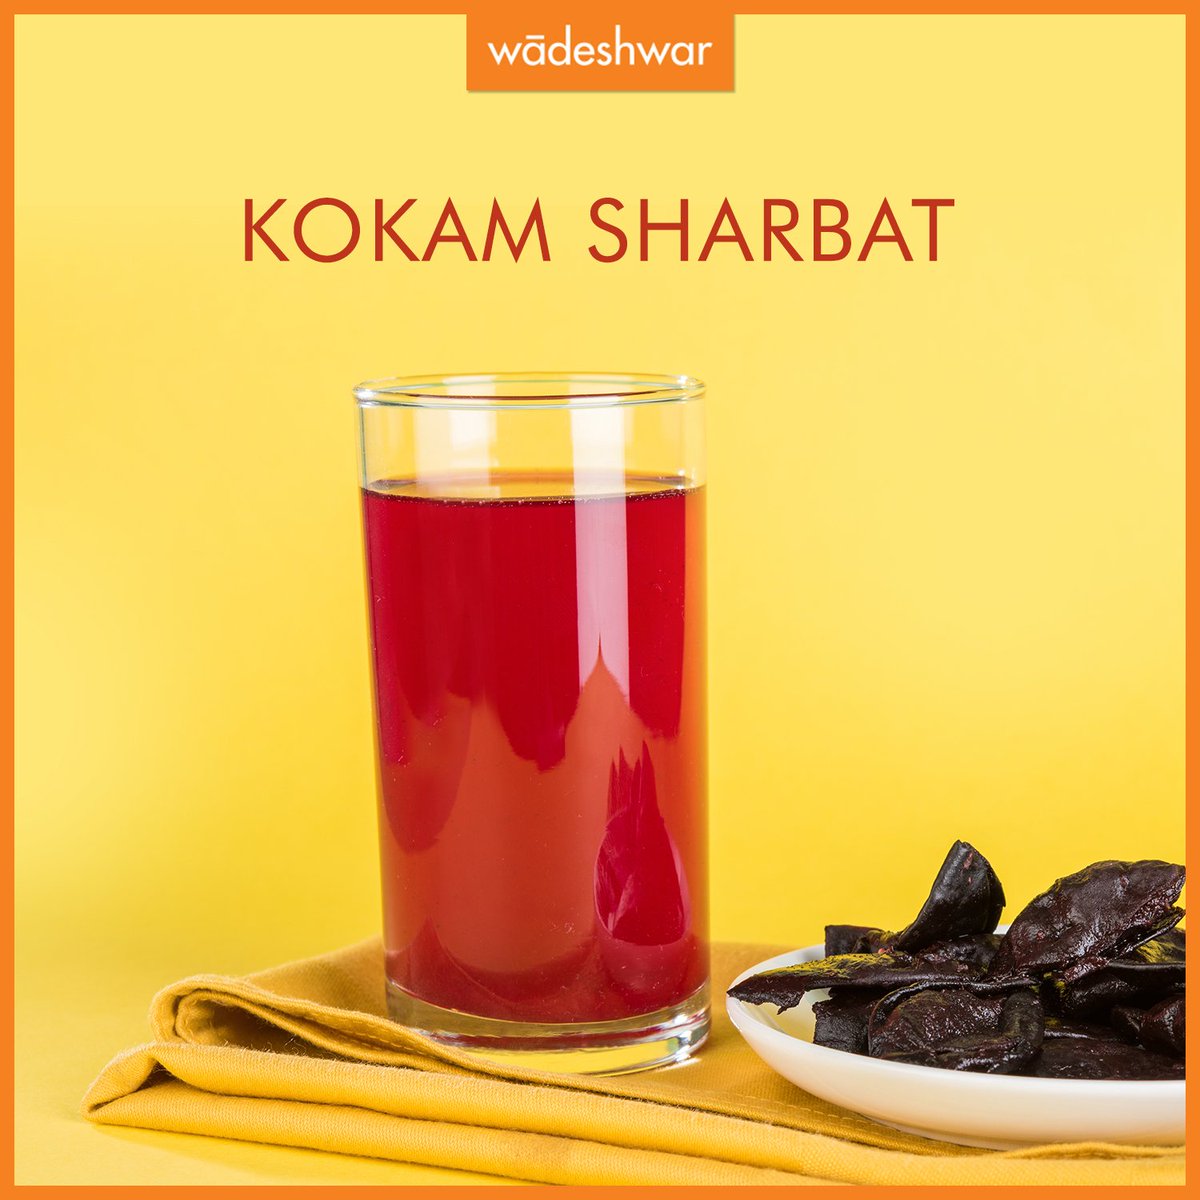 Kokam Sharbat a perfect summer coolant to counteract the blazing heat.
#PuneFoodie #SummerDrinks #kokamSharbat #NaturalDrink